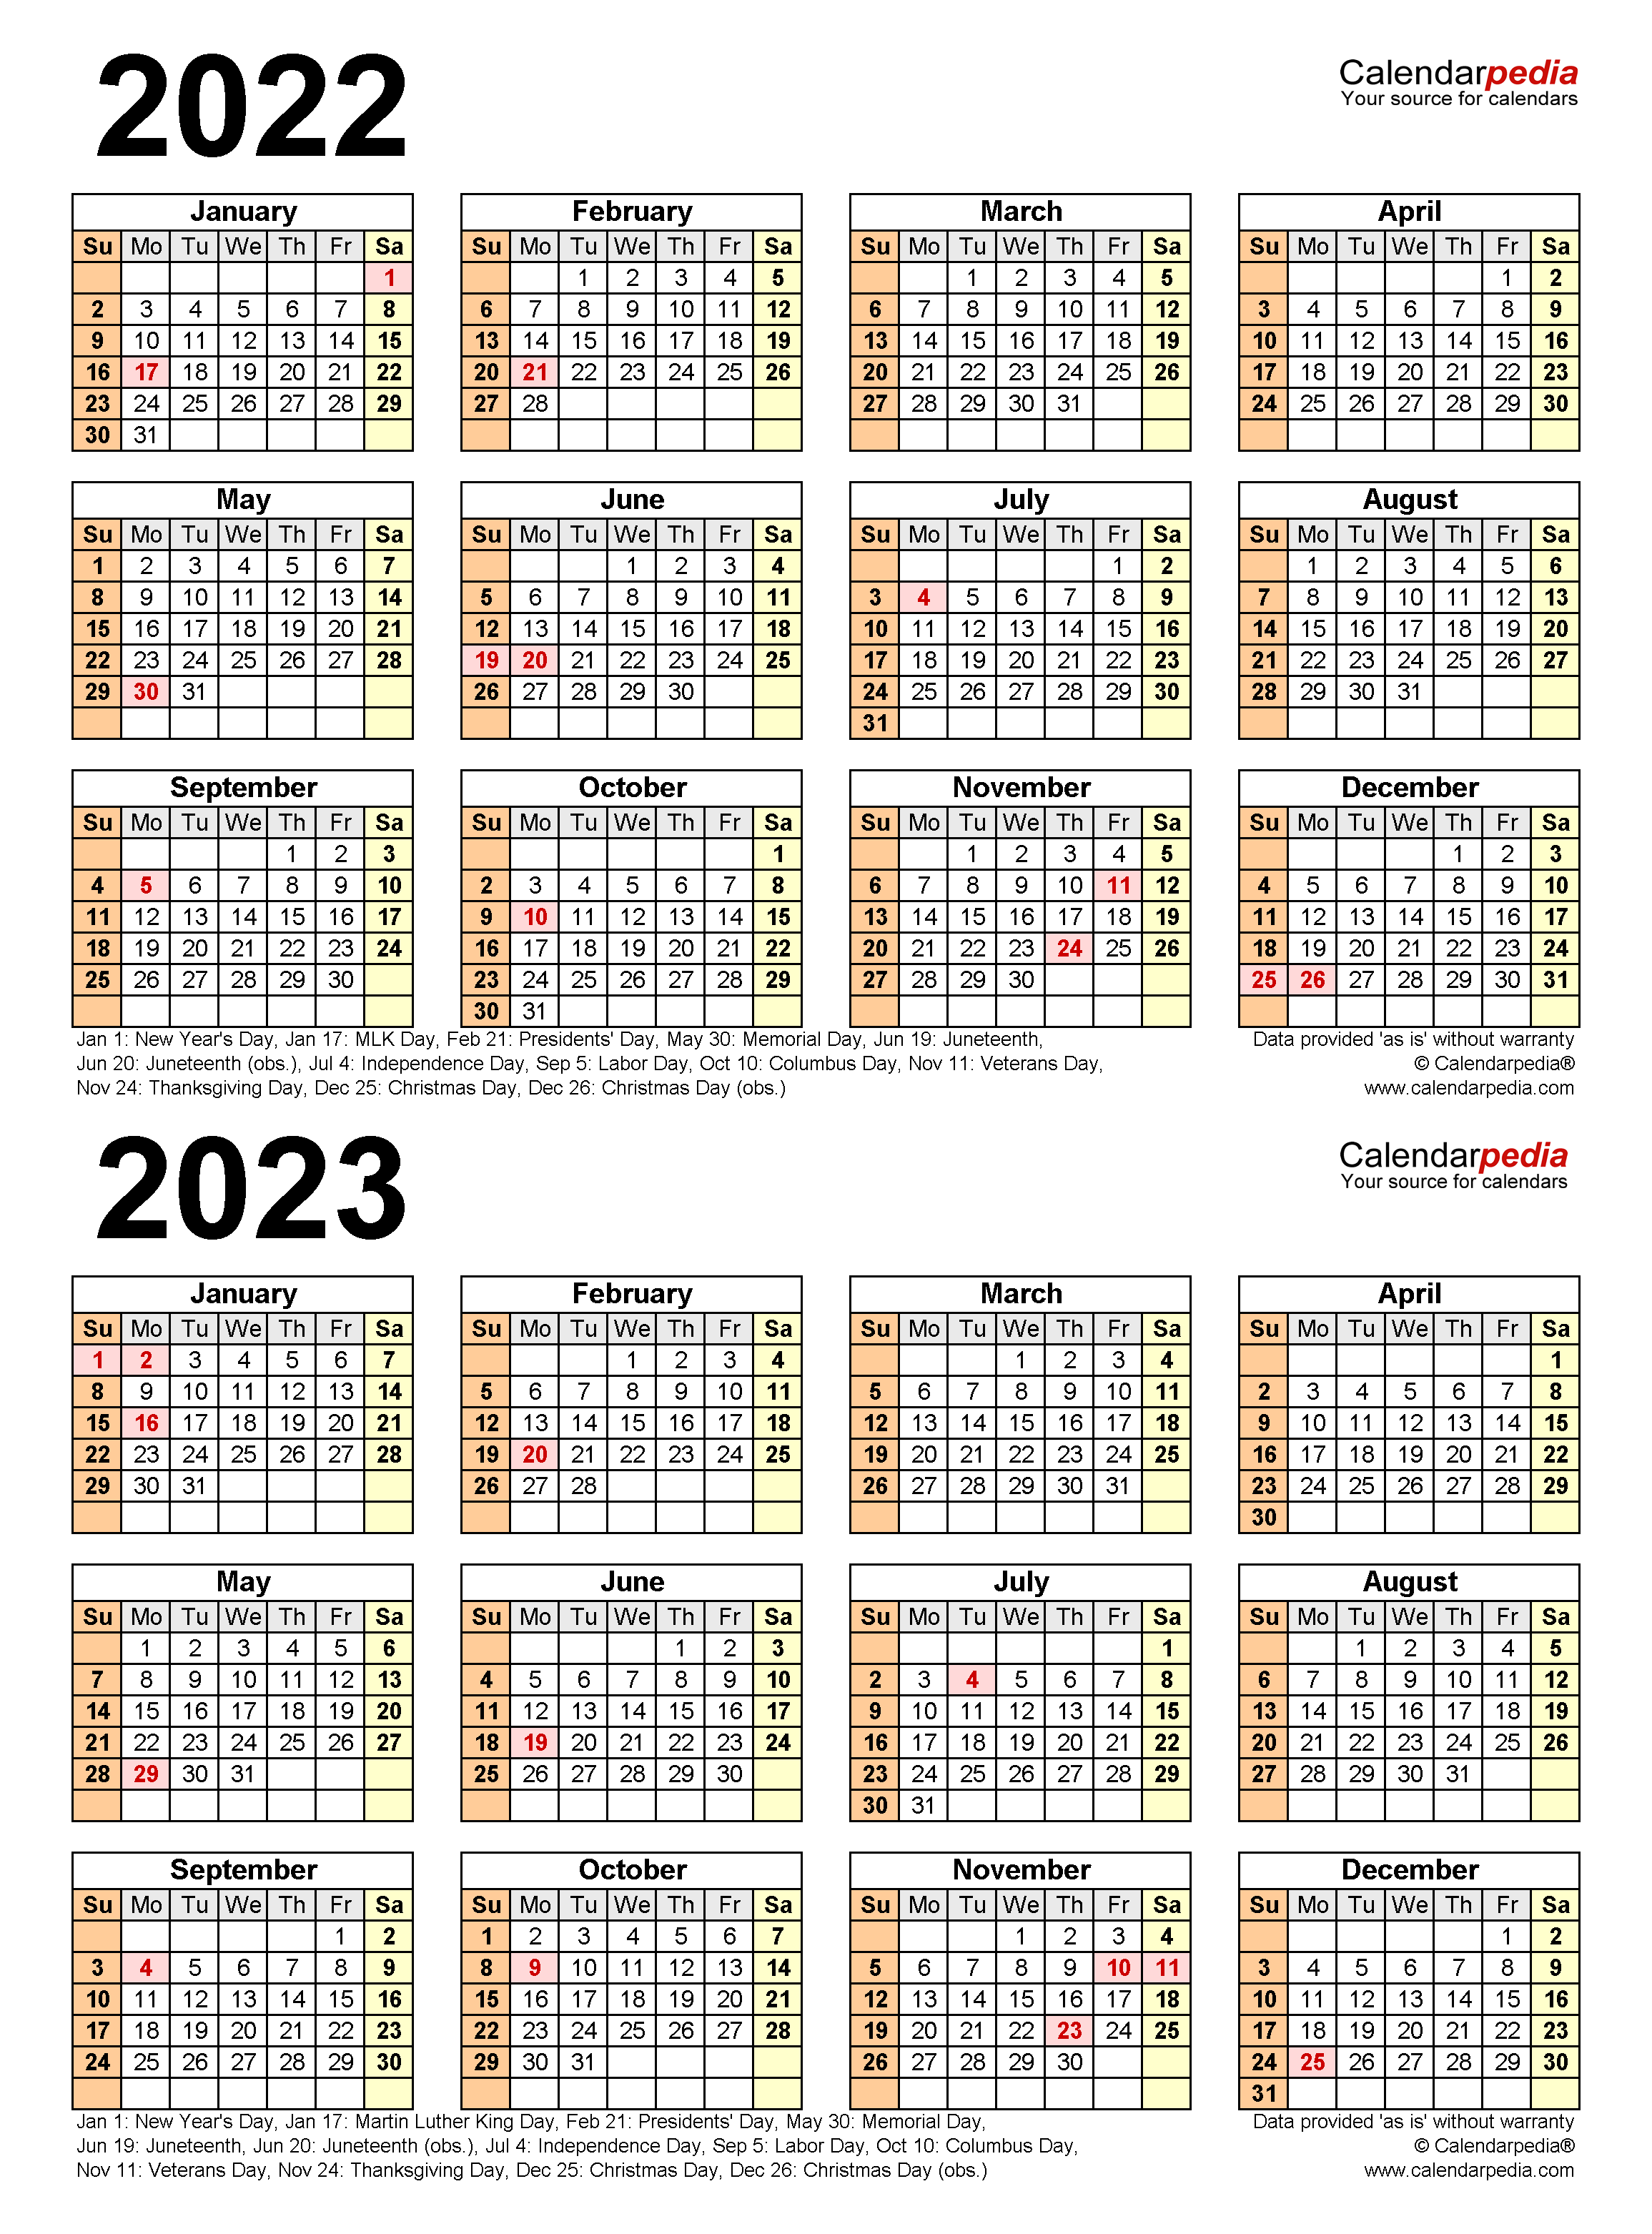 [High Resolution] Csun 2022-2023 Calendar